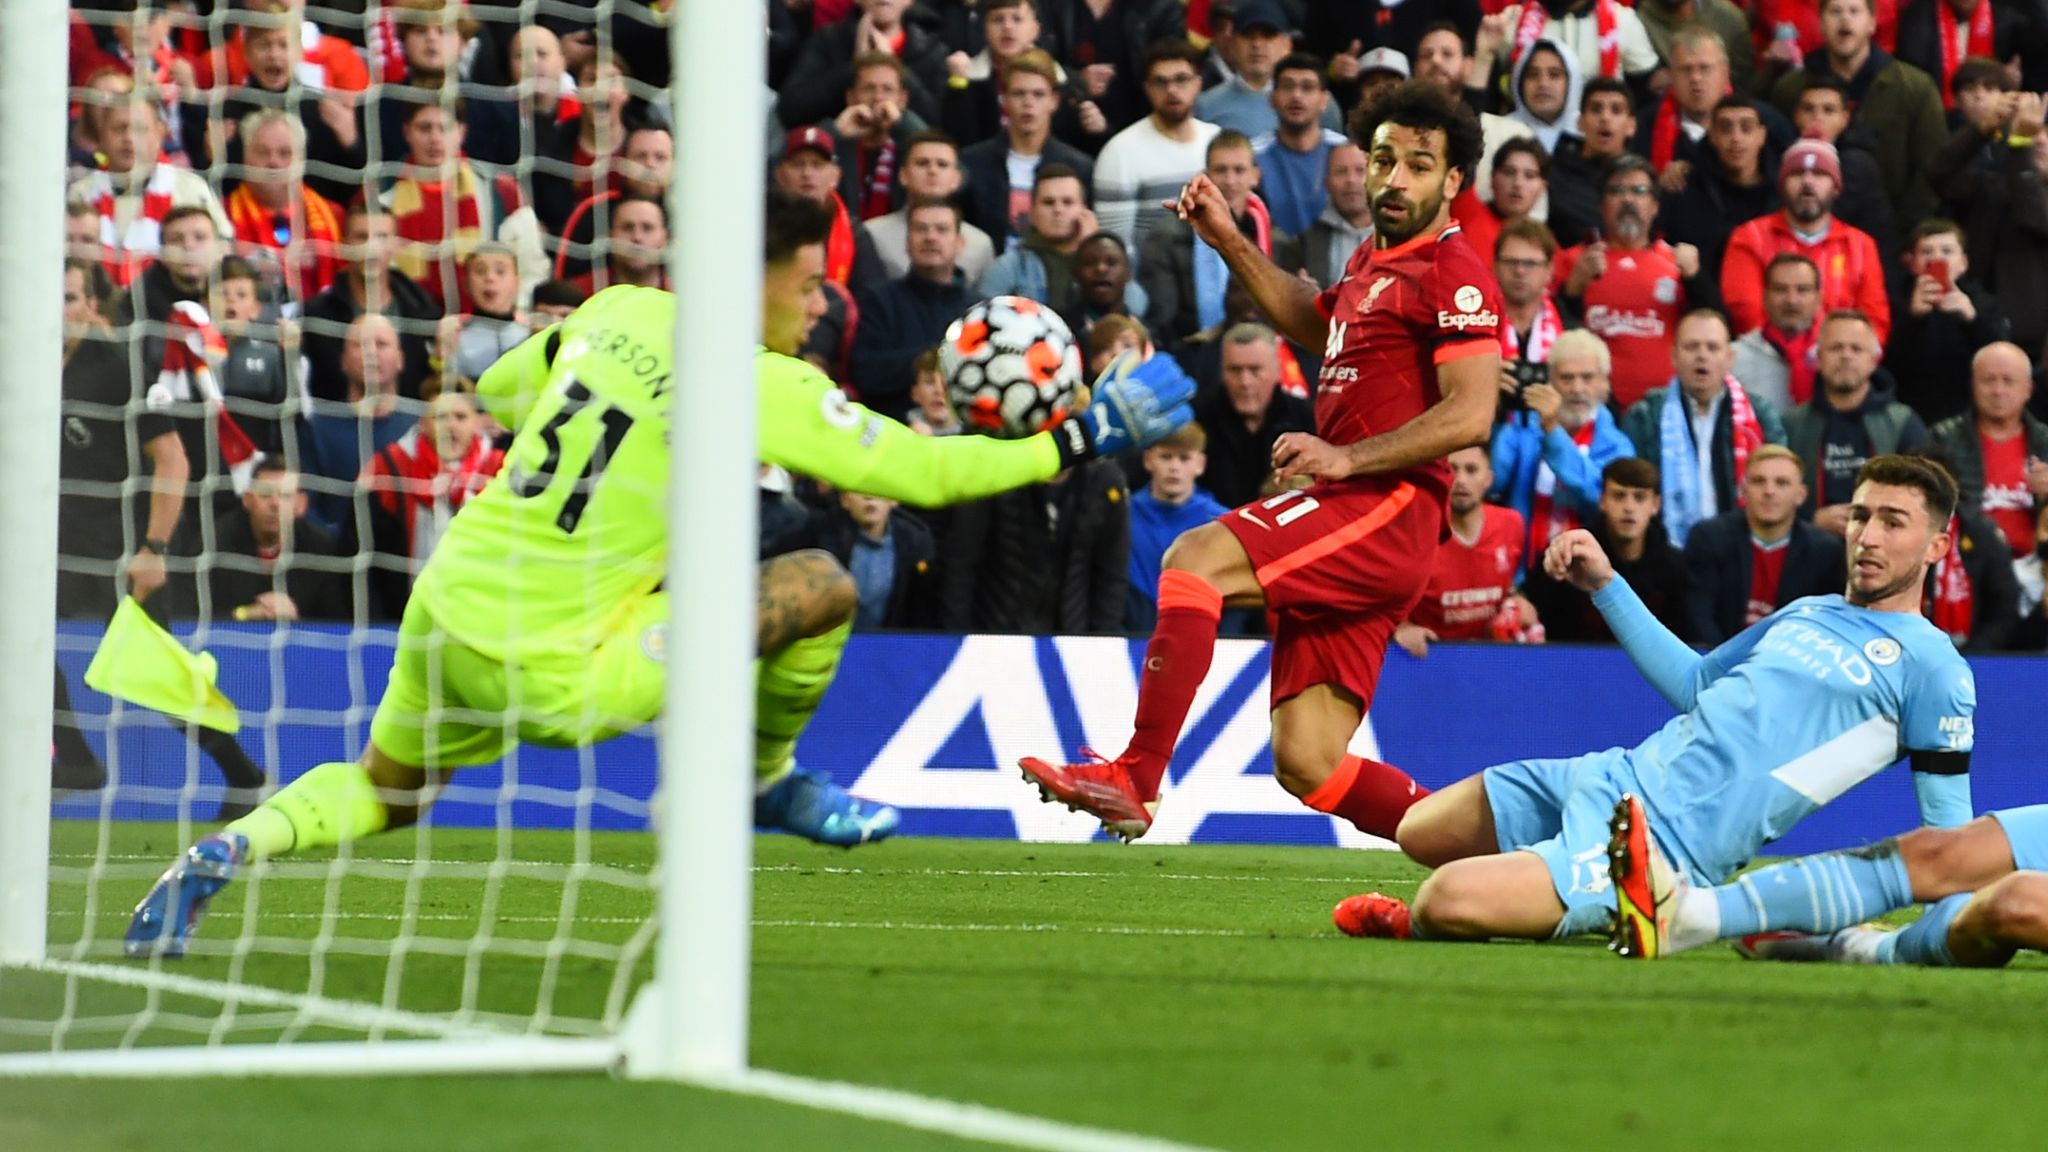 Mohamed Salah previews Liverpool vs. Manchester City